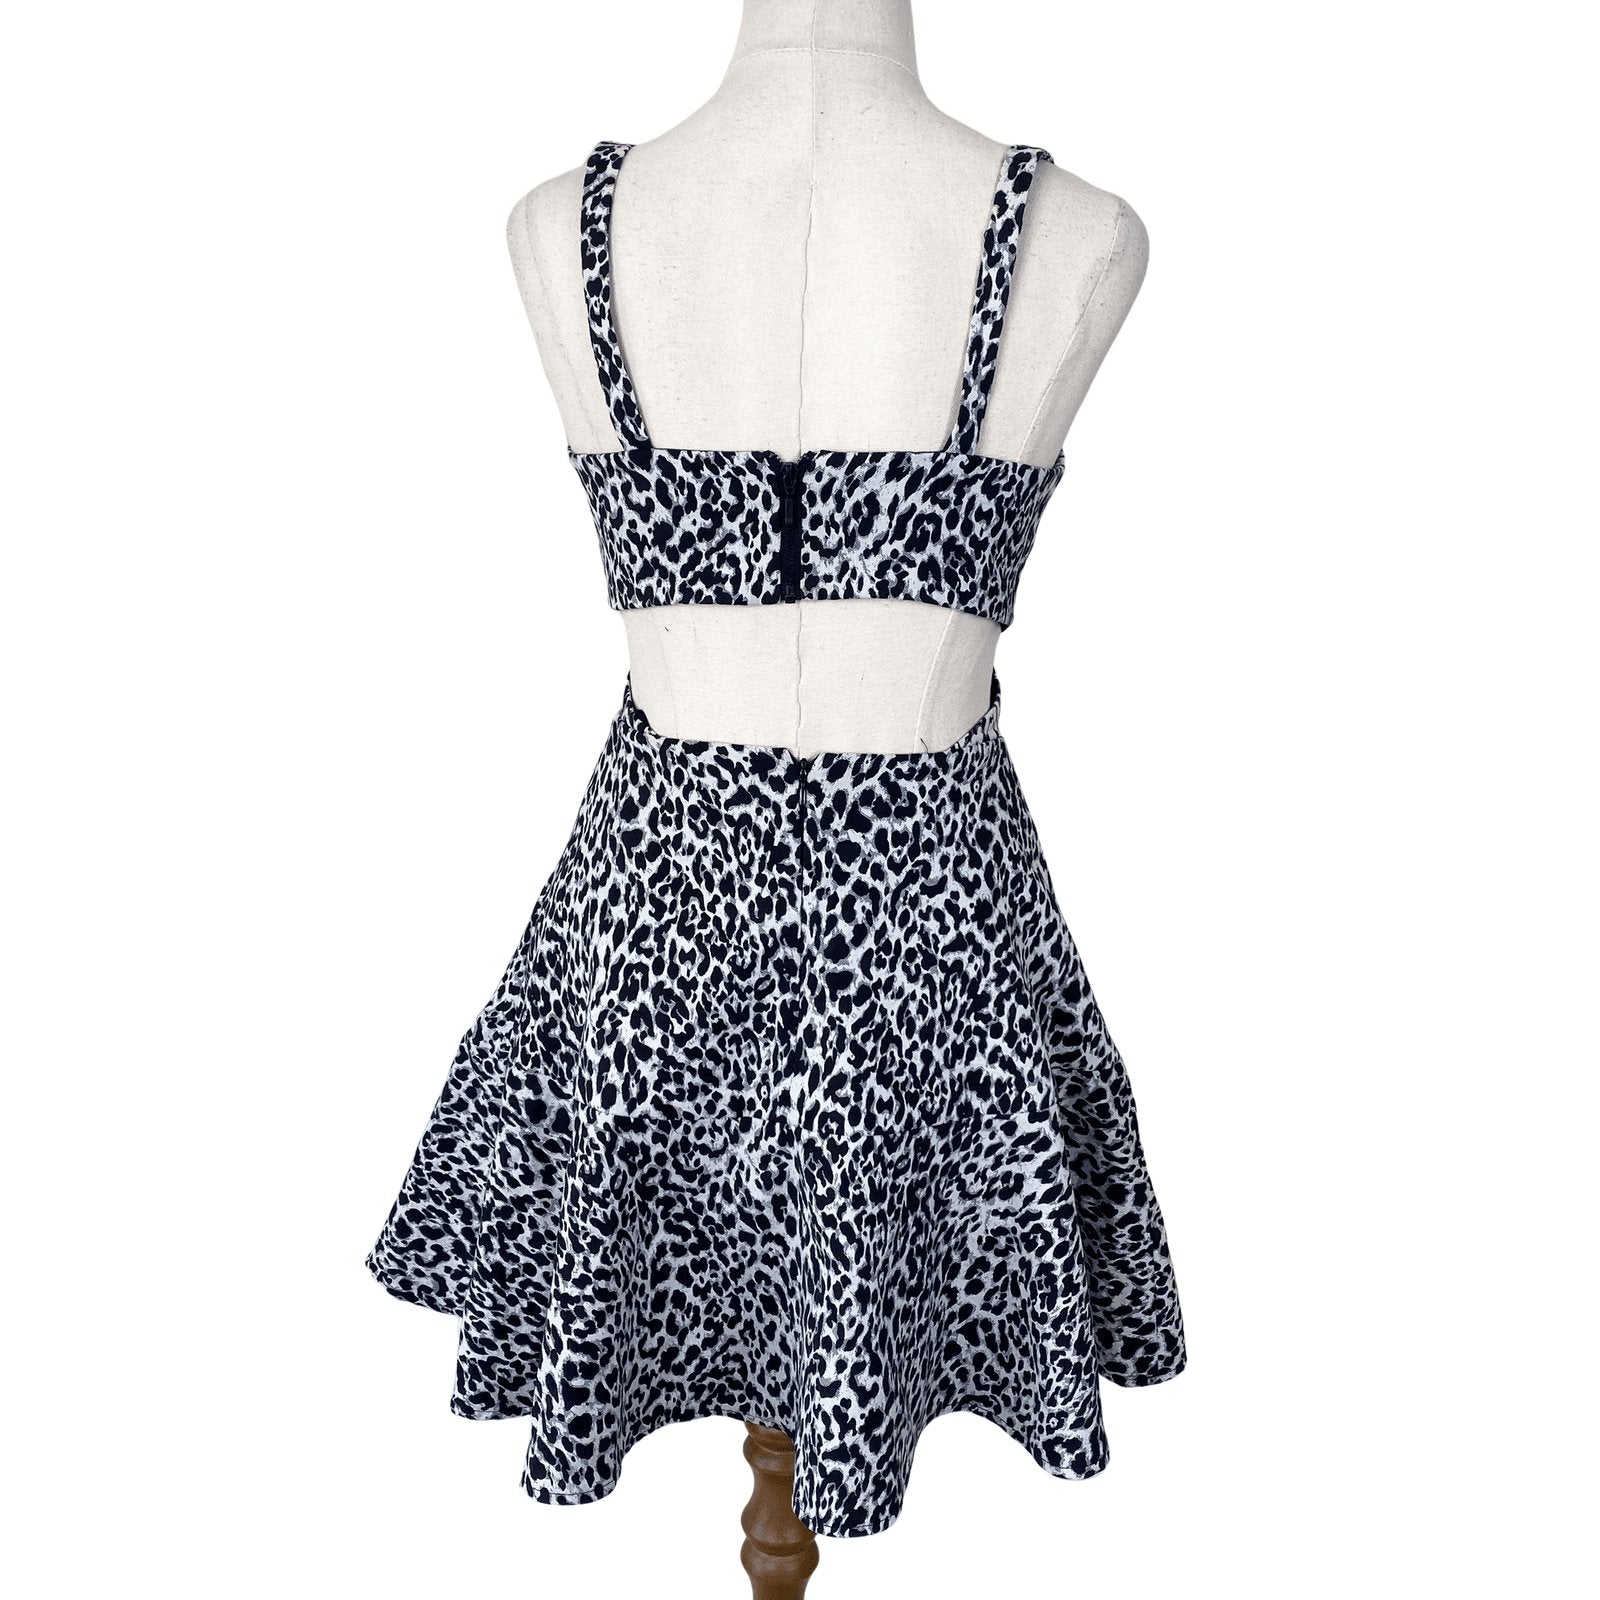 Bec & Bridge Snow Leopard Print Cutout Dress | size 6